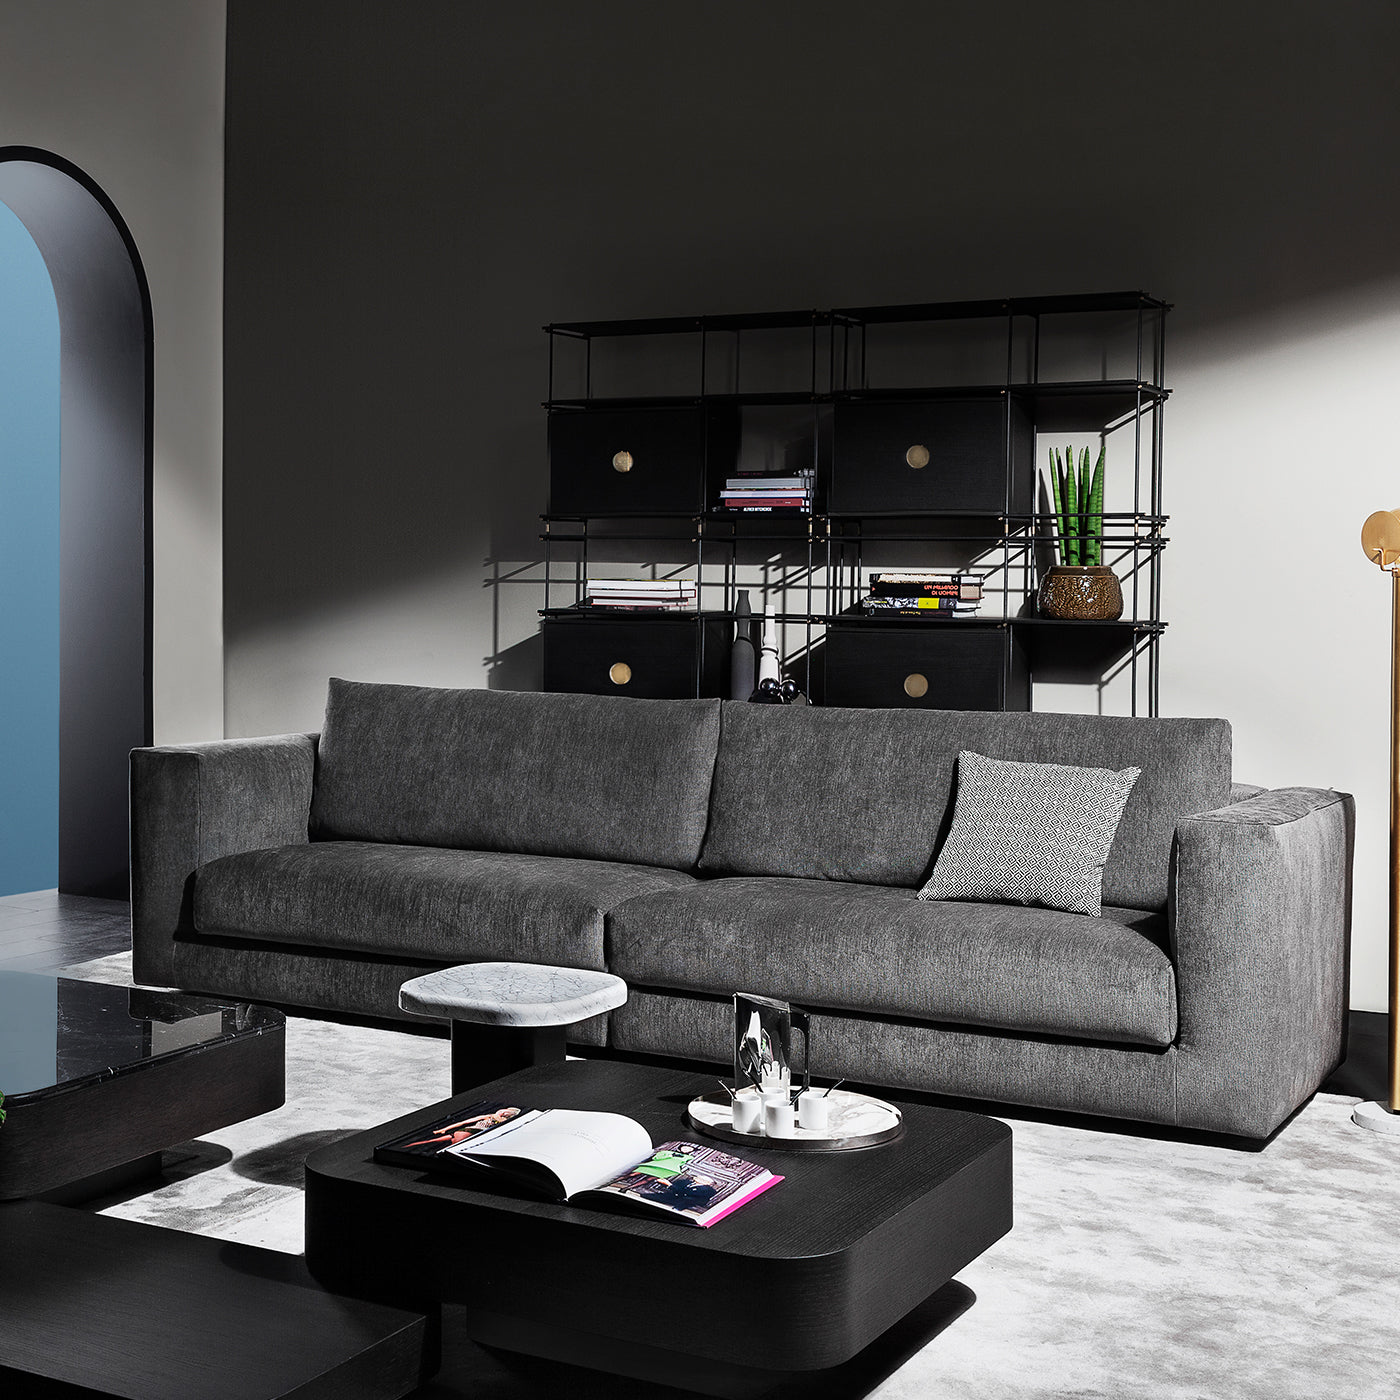 Evo 845 Large Gray Sofa by Gianluigi Landoni - Alternative view 1